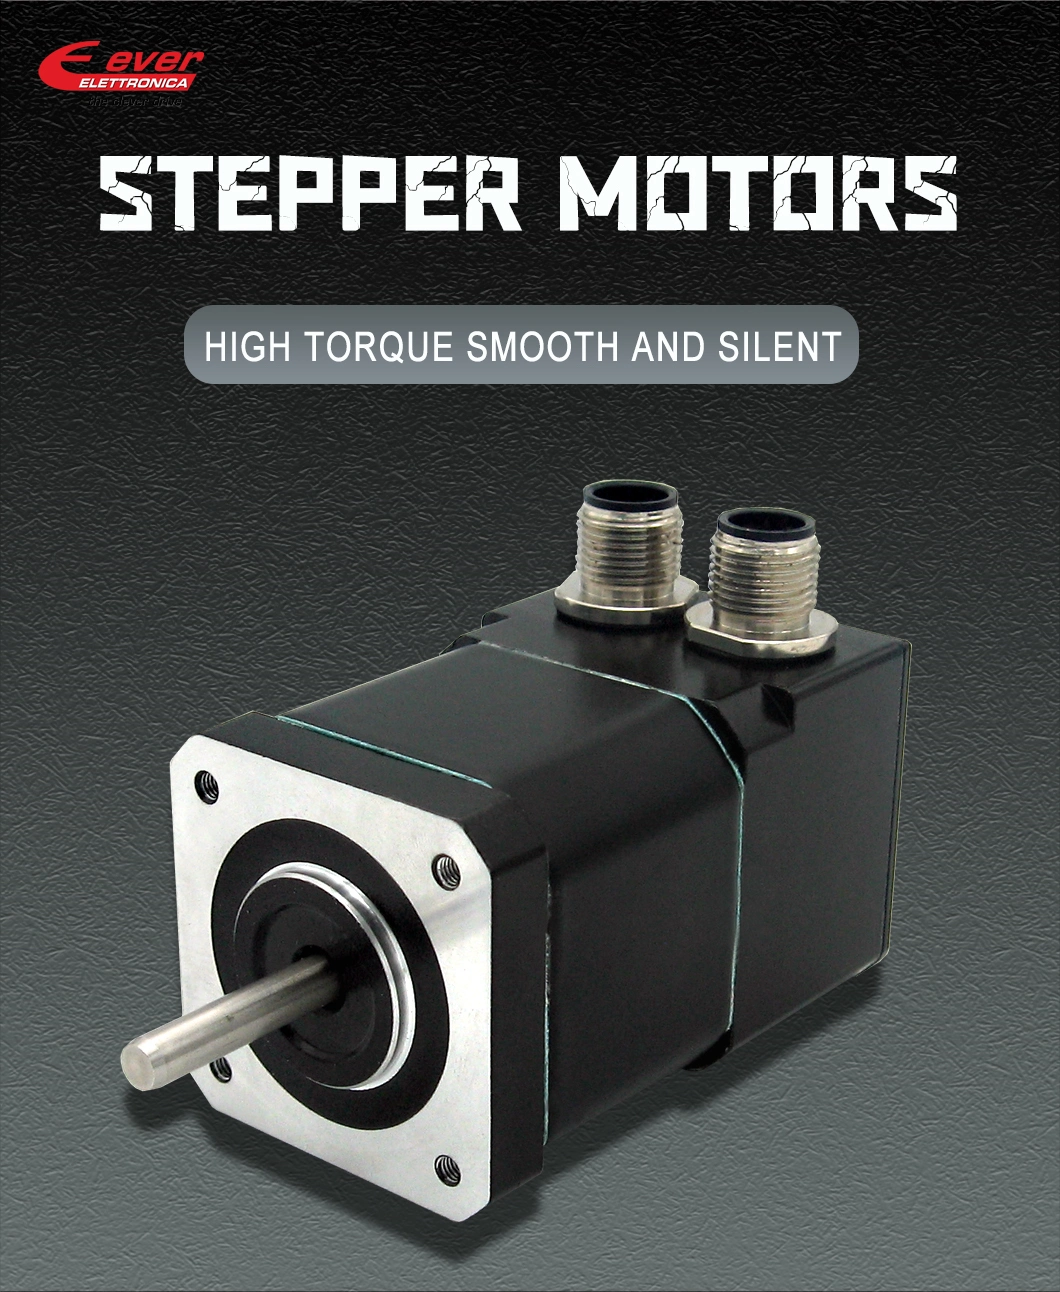 NEMA 24 Electric Hybrid Closed Loop Stepper Motor Electric Motor with Brake for 3D Printer